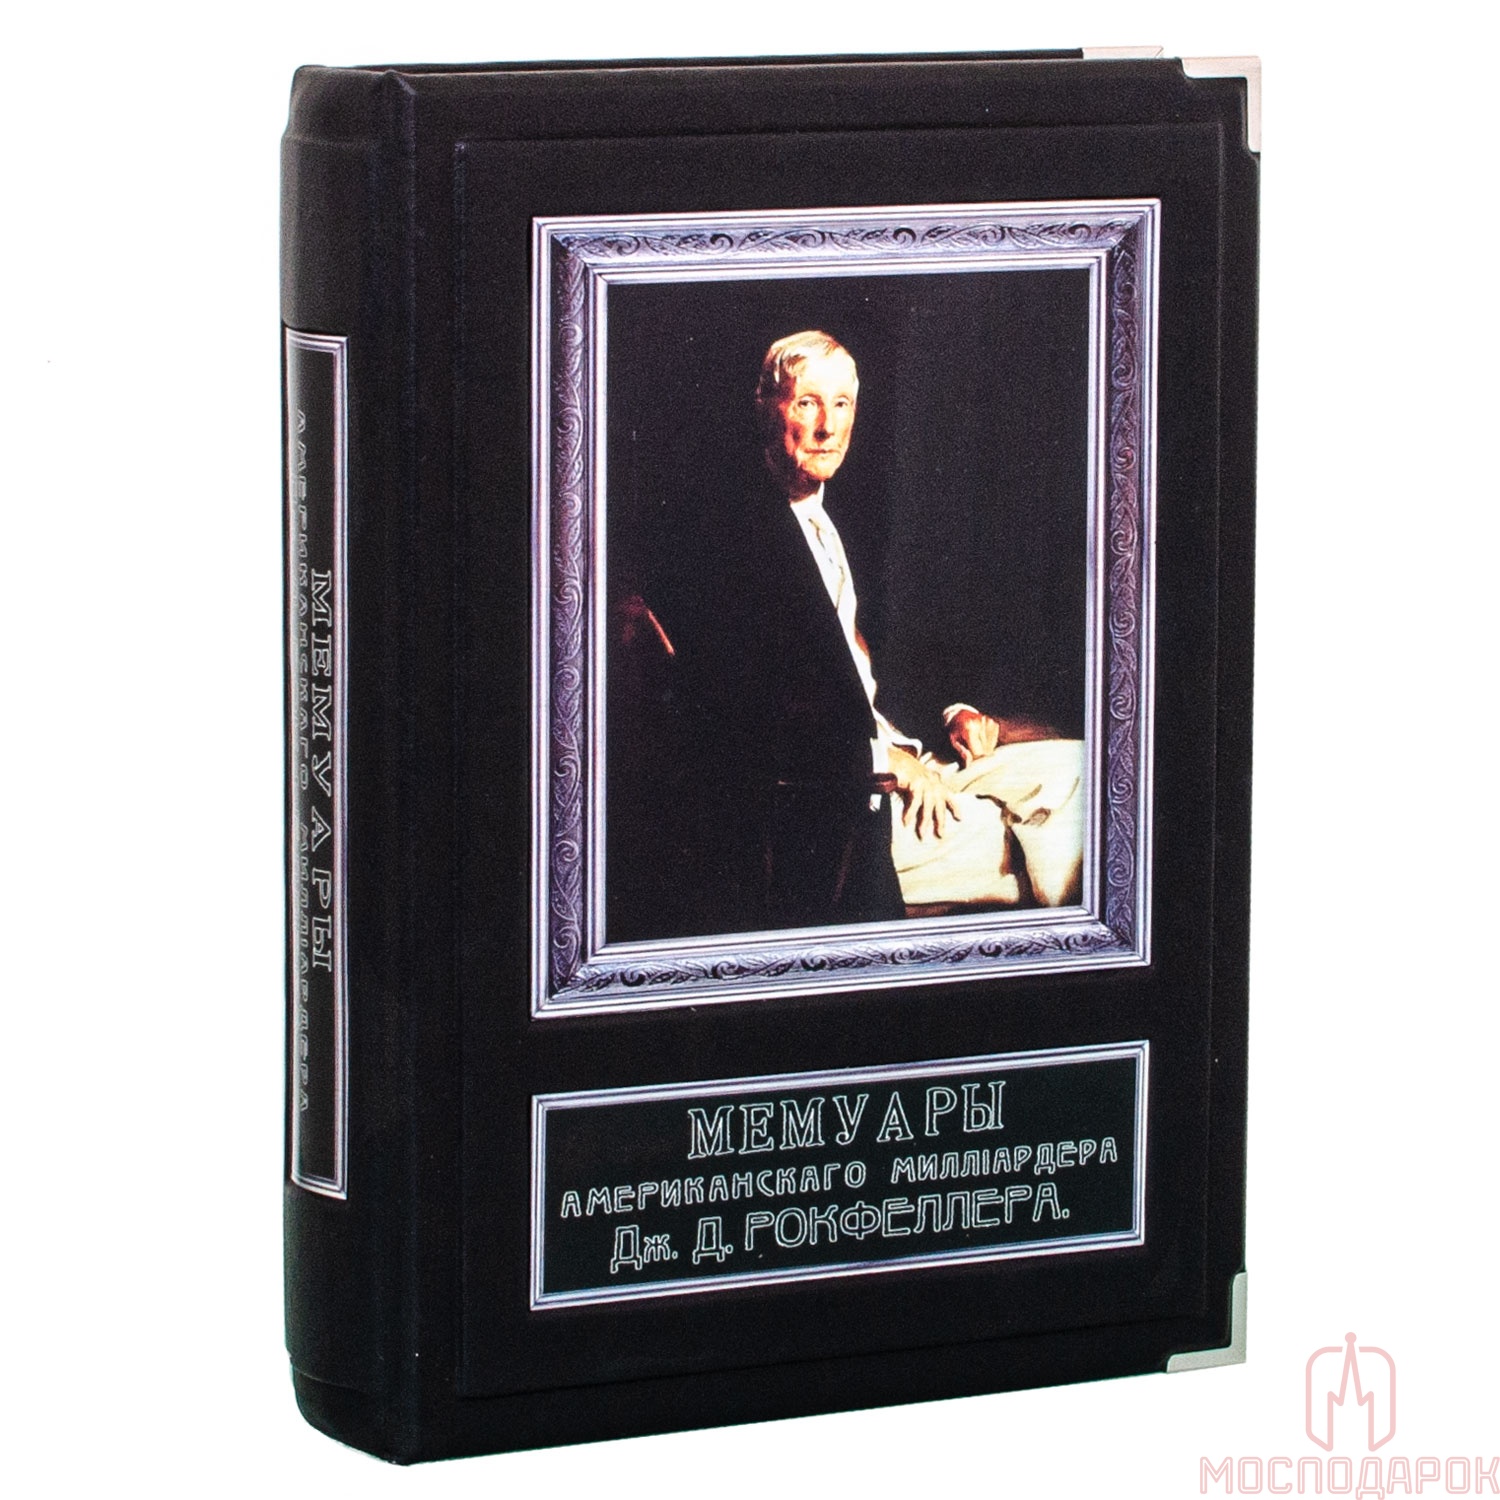 Подарочная книга "Мемуары американского миллиардера Дж. Д. Рокфеллера" - артикул: 205316 | Мосподарок 